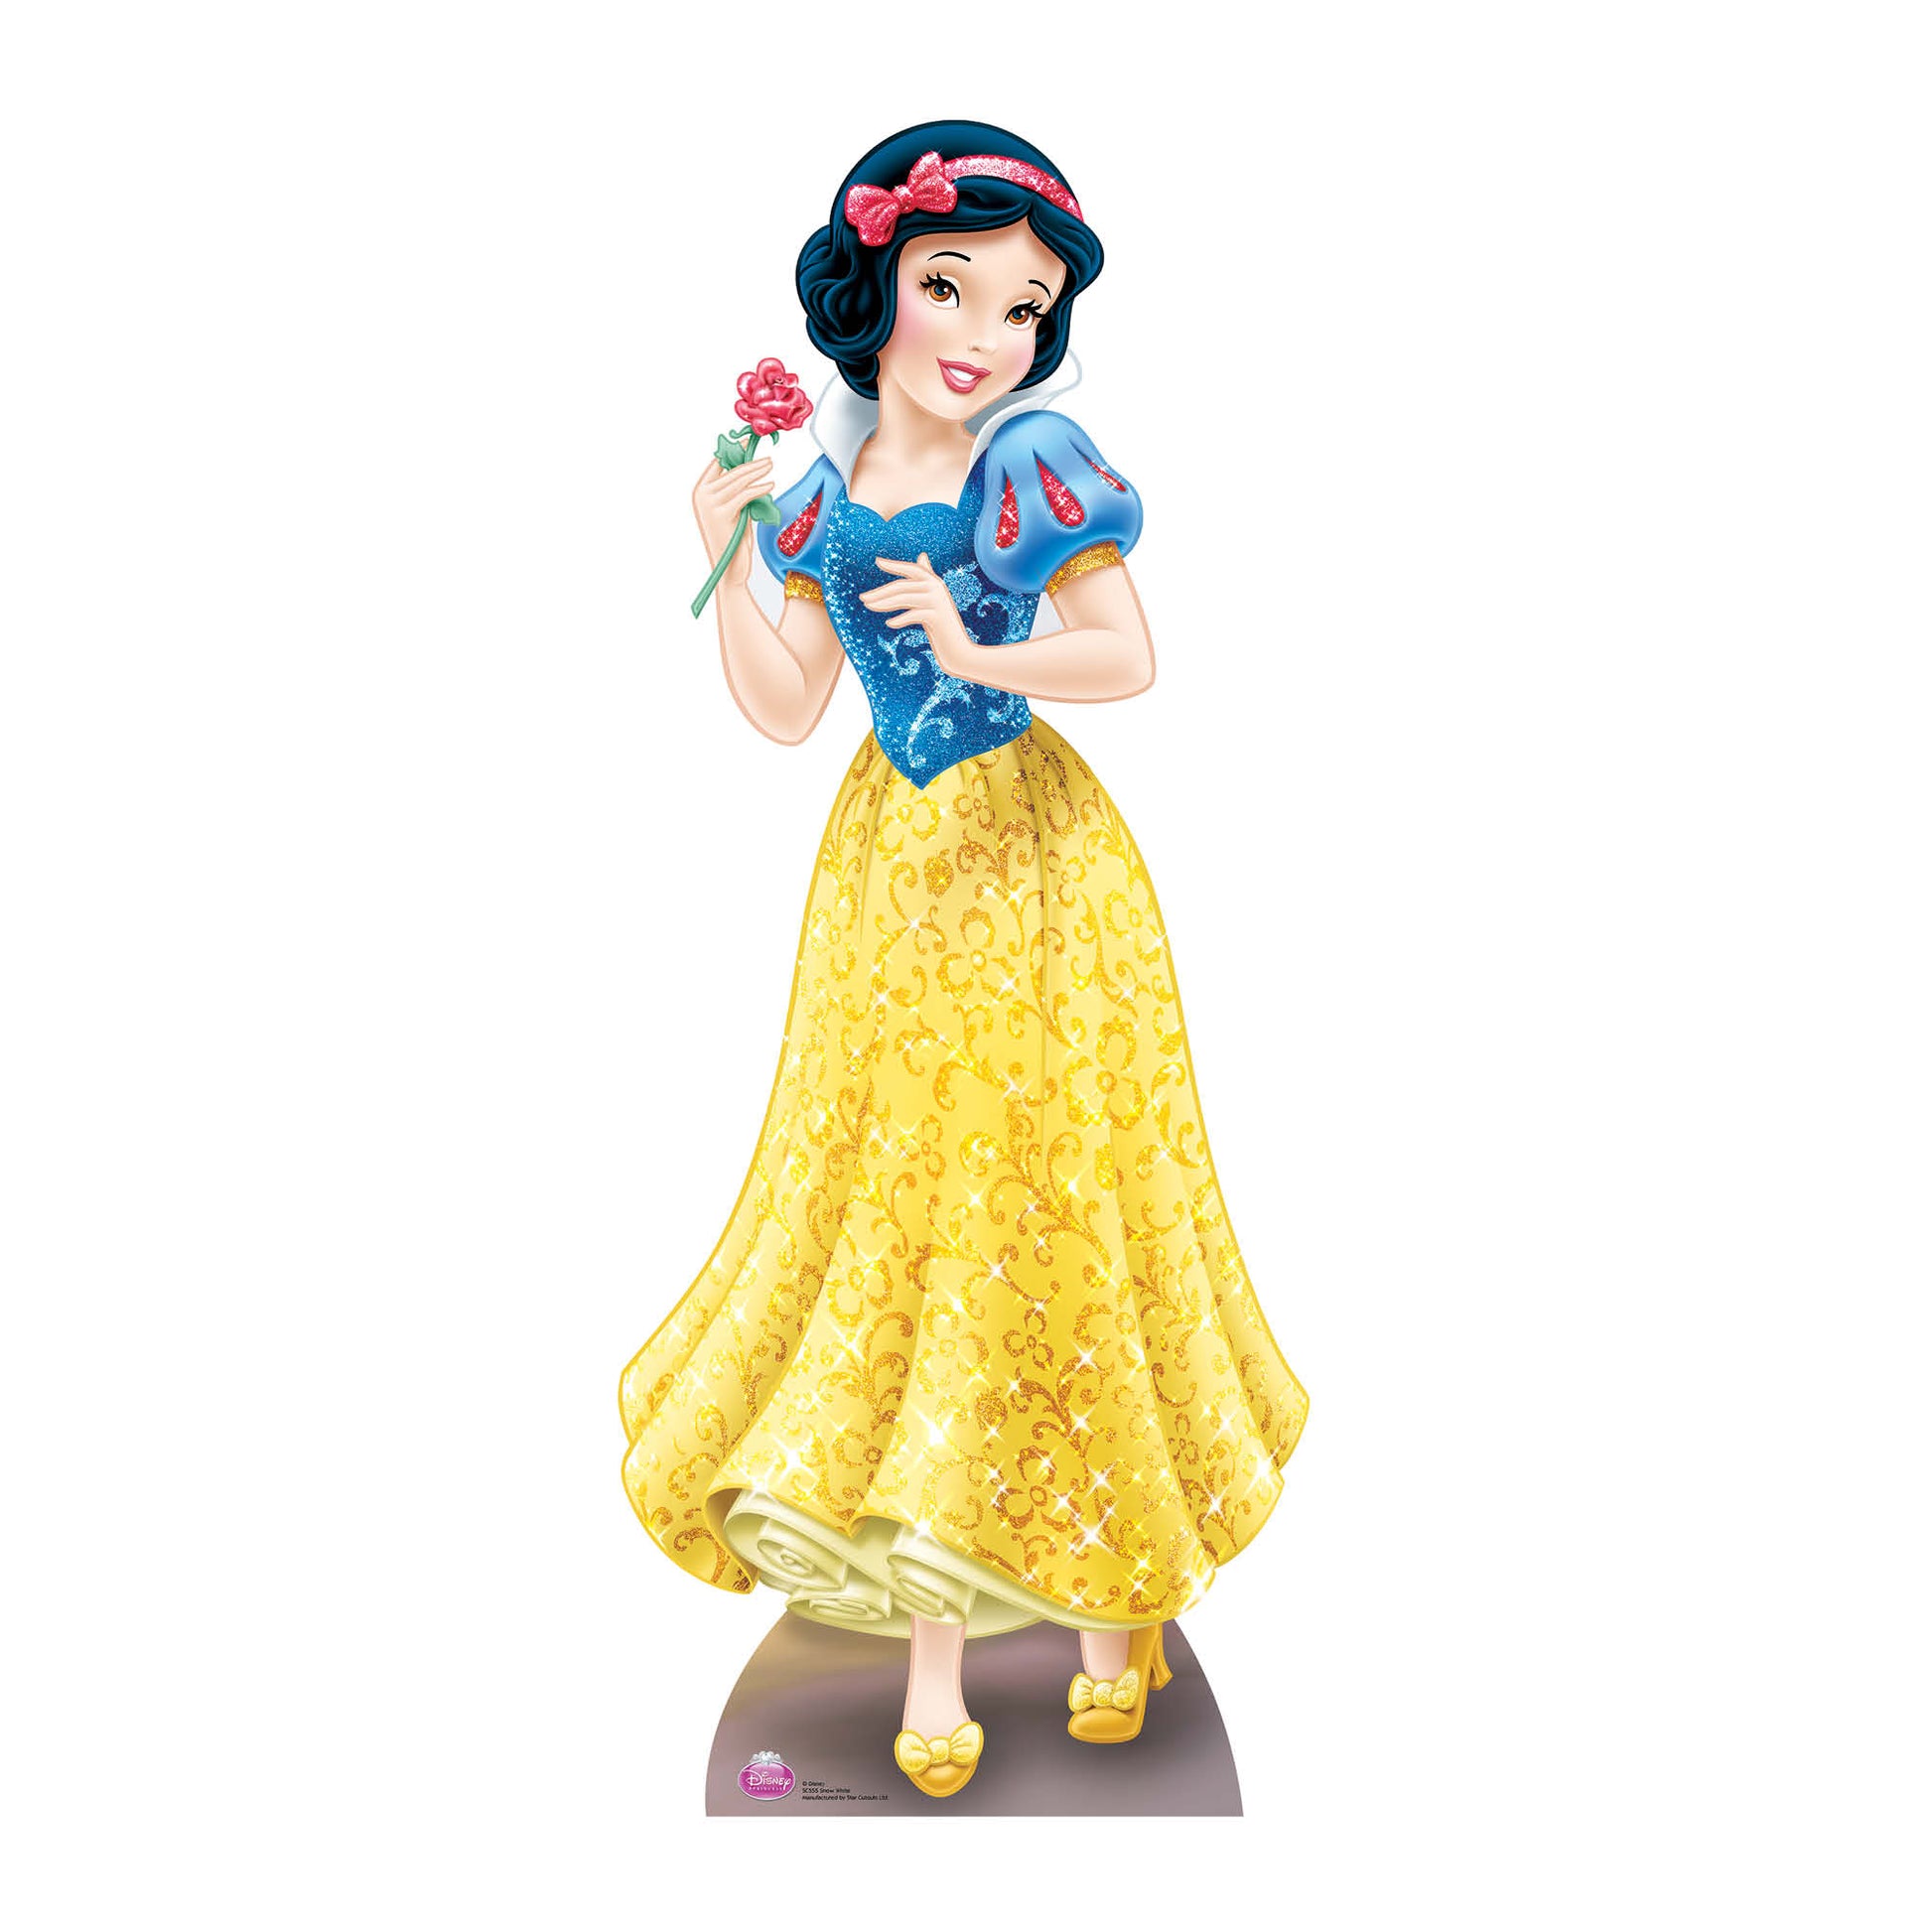 Official Princess Snow White Cardboard Cutout